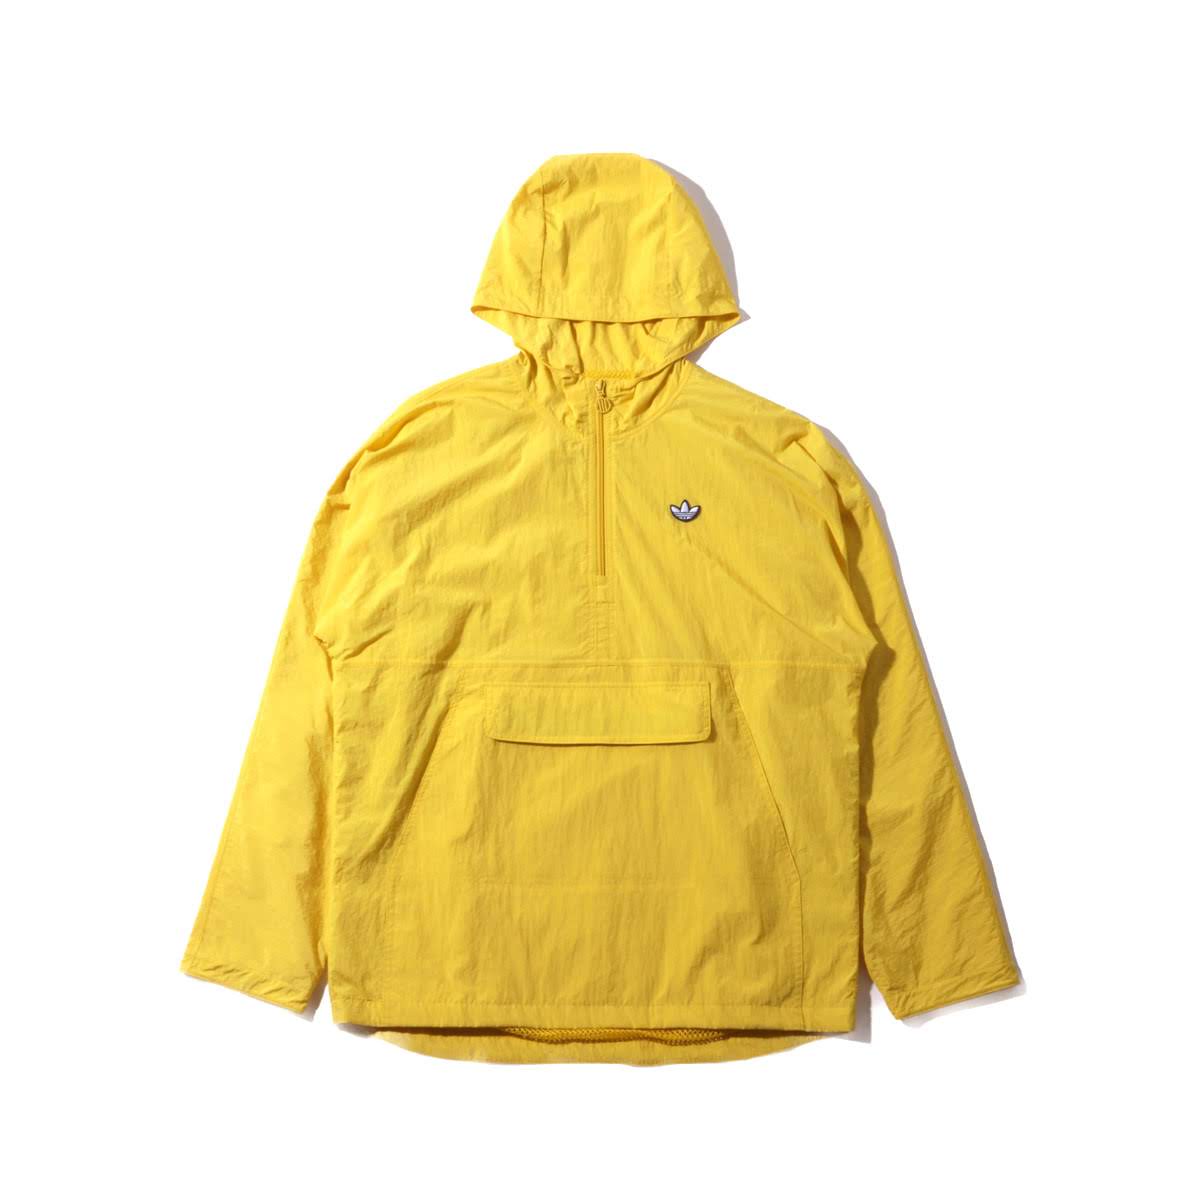 yellow adidas rain jacket